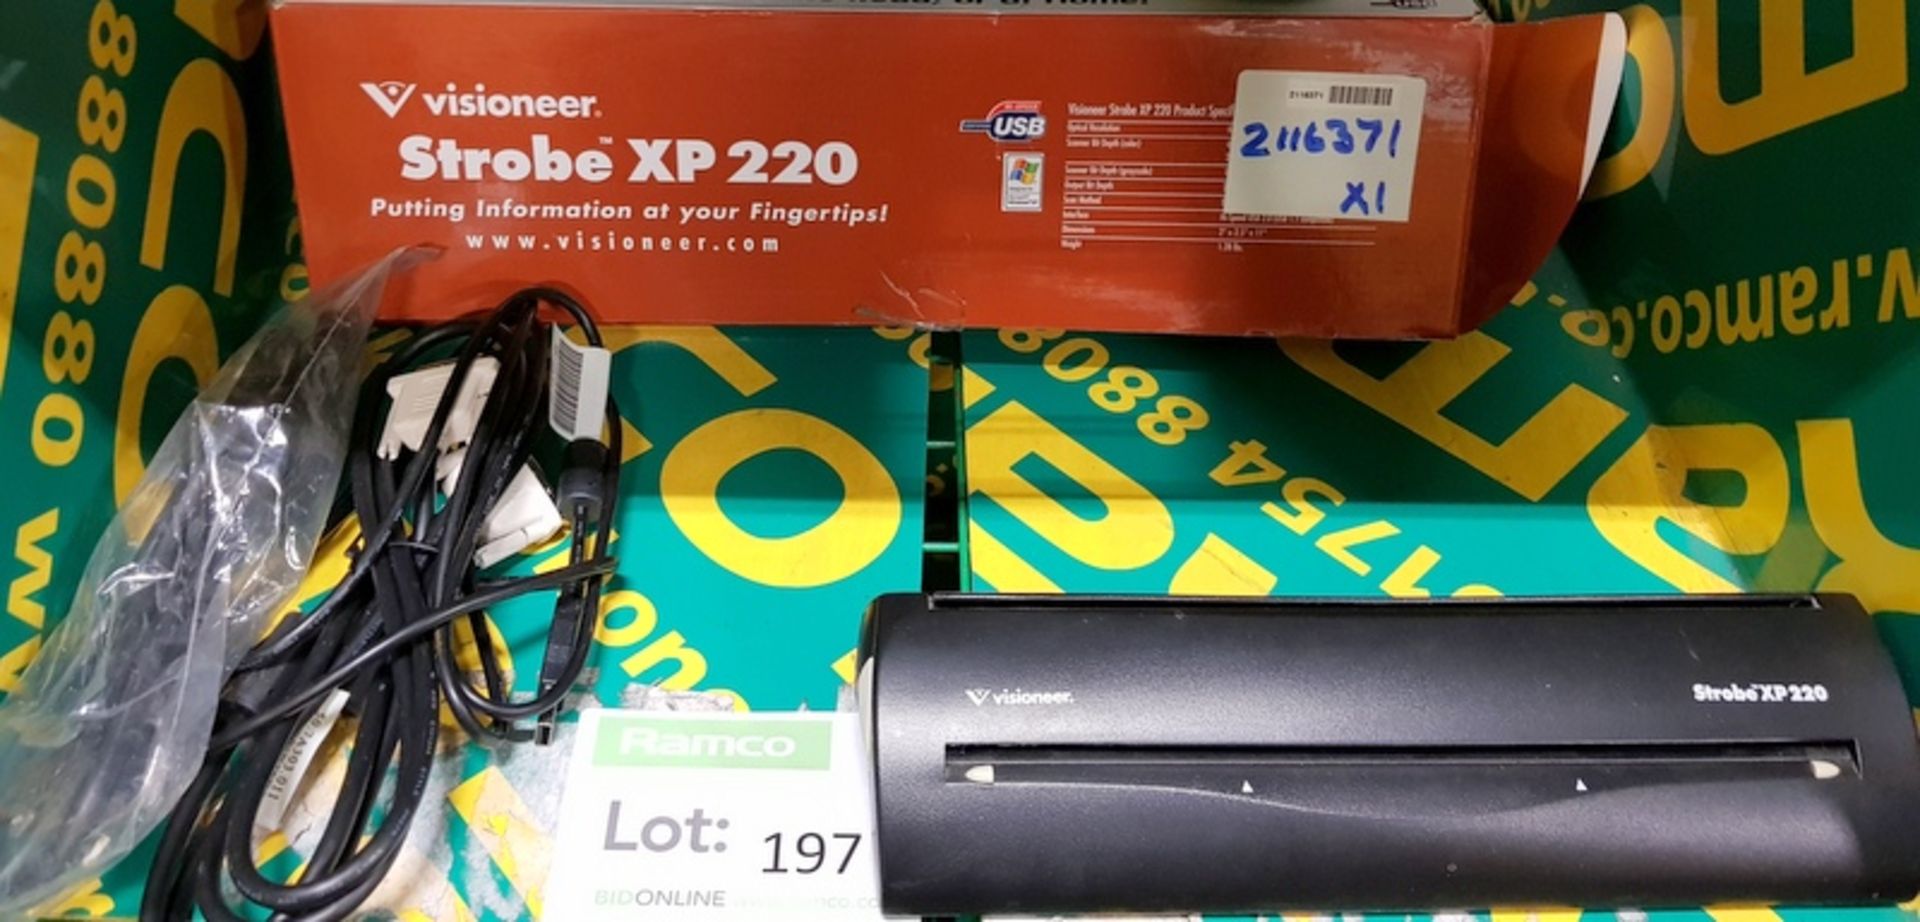 Visioneer Strobe XP220 - Auto Scanning desktop scanner - Image 2 of 5